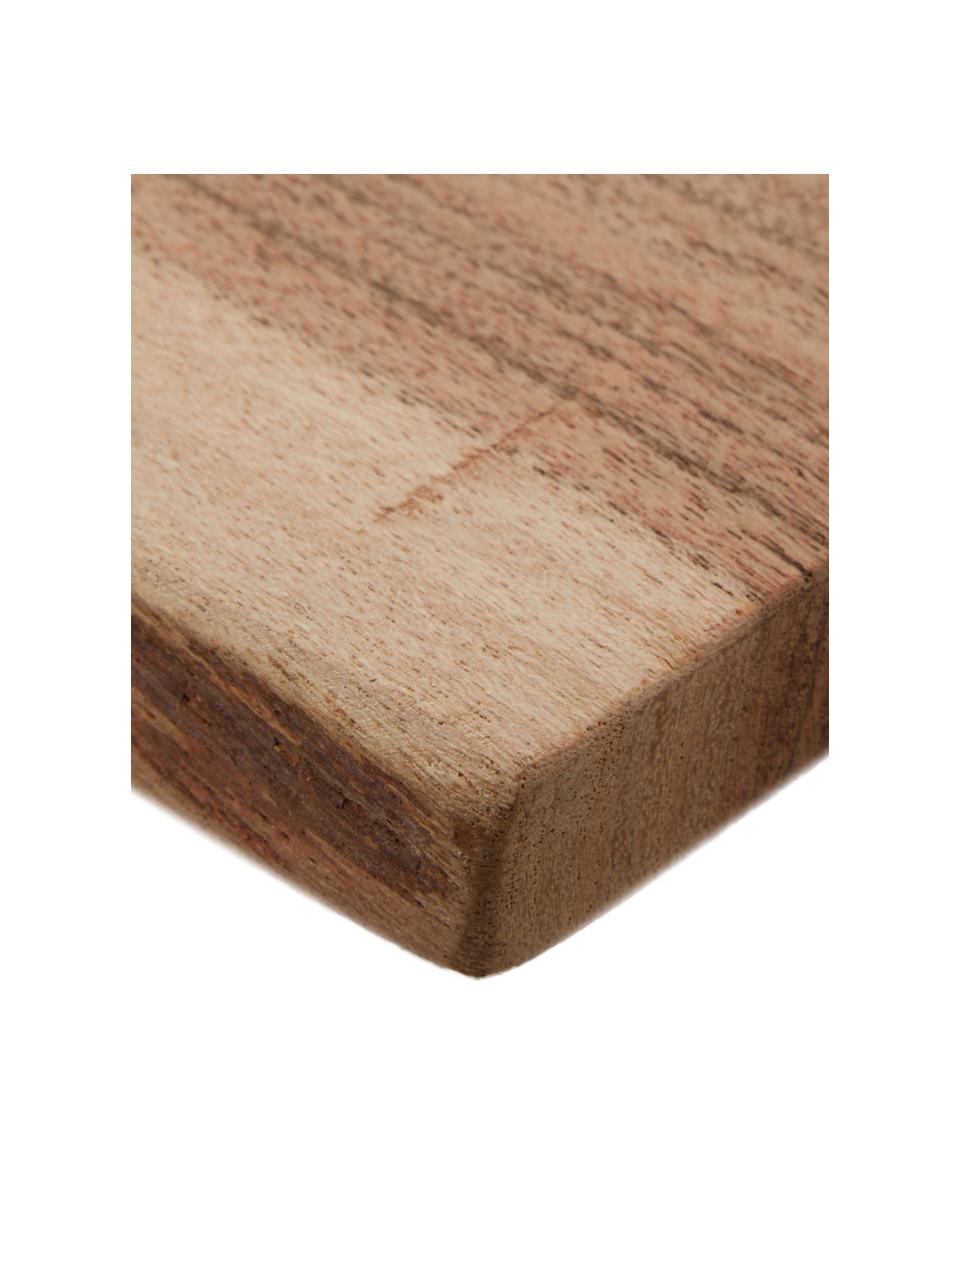 Tabla de cortar de madera de acacia Limitless, Madera de acacia, Madera oscura, L 65 x An 15 cm